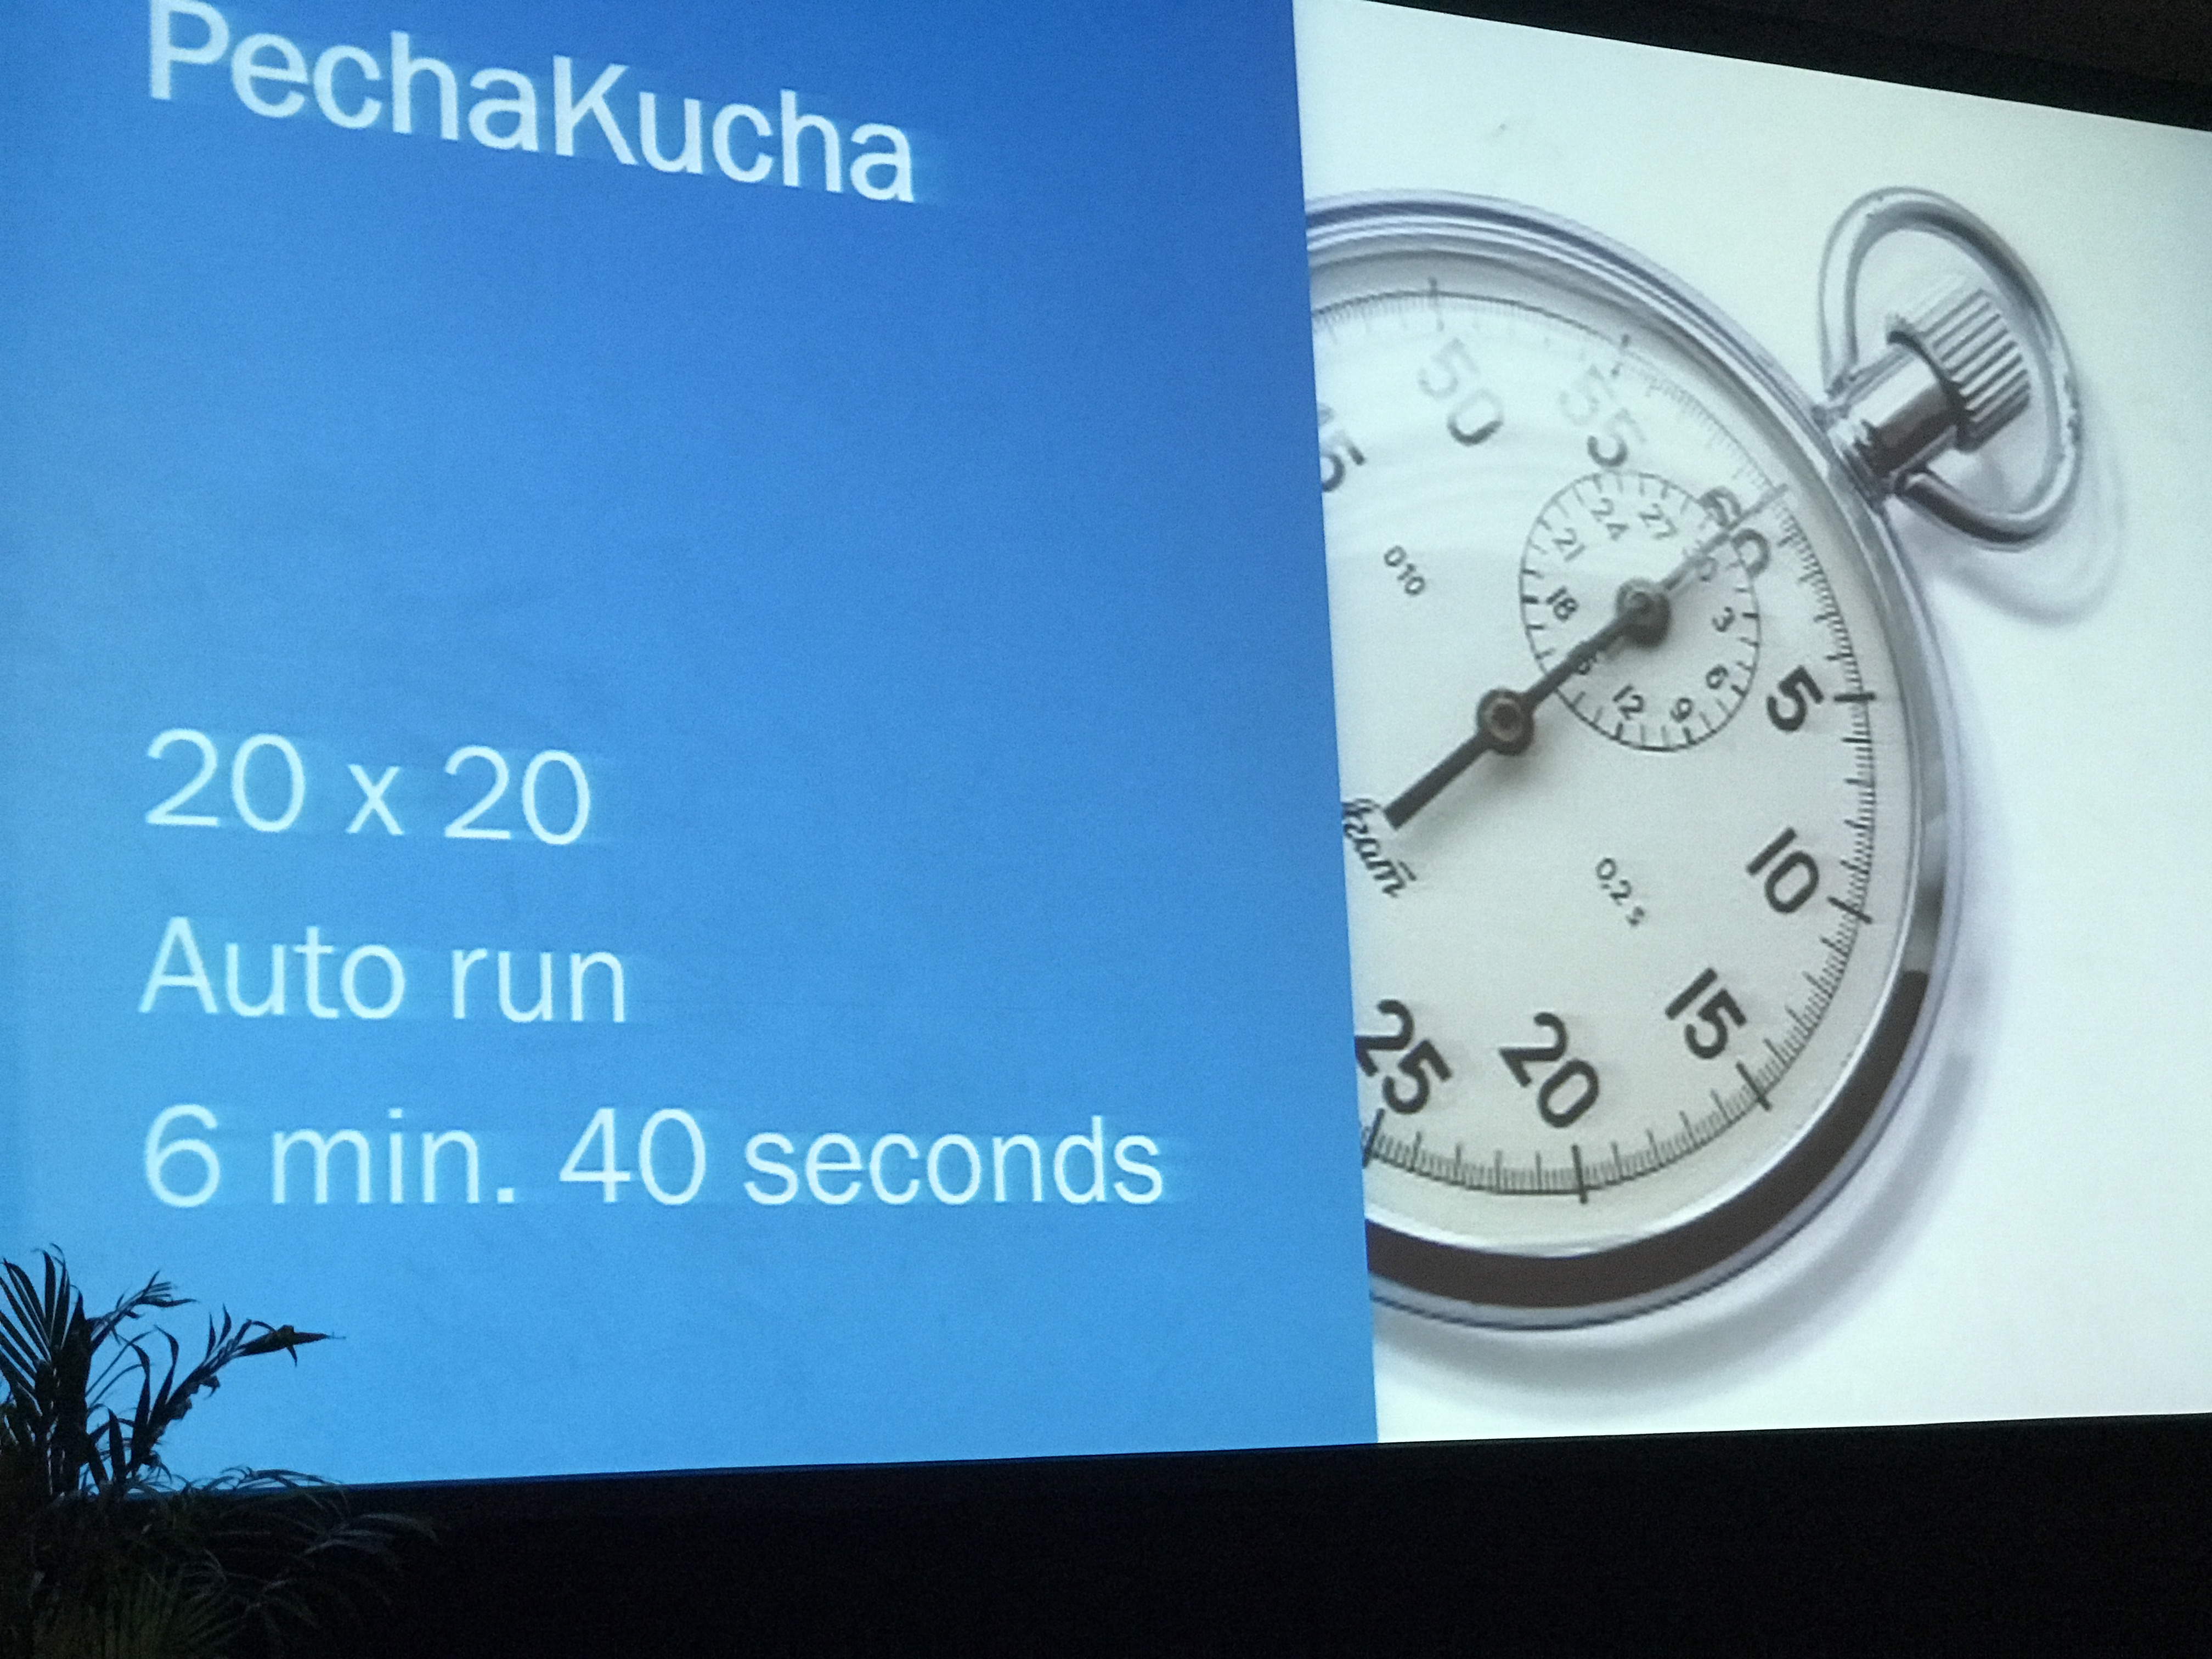 pechakucha rules: 20 slides, 20 seconds each, auto-advance